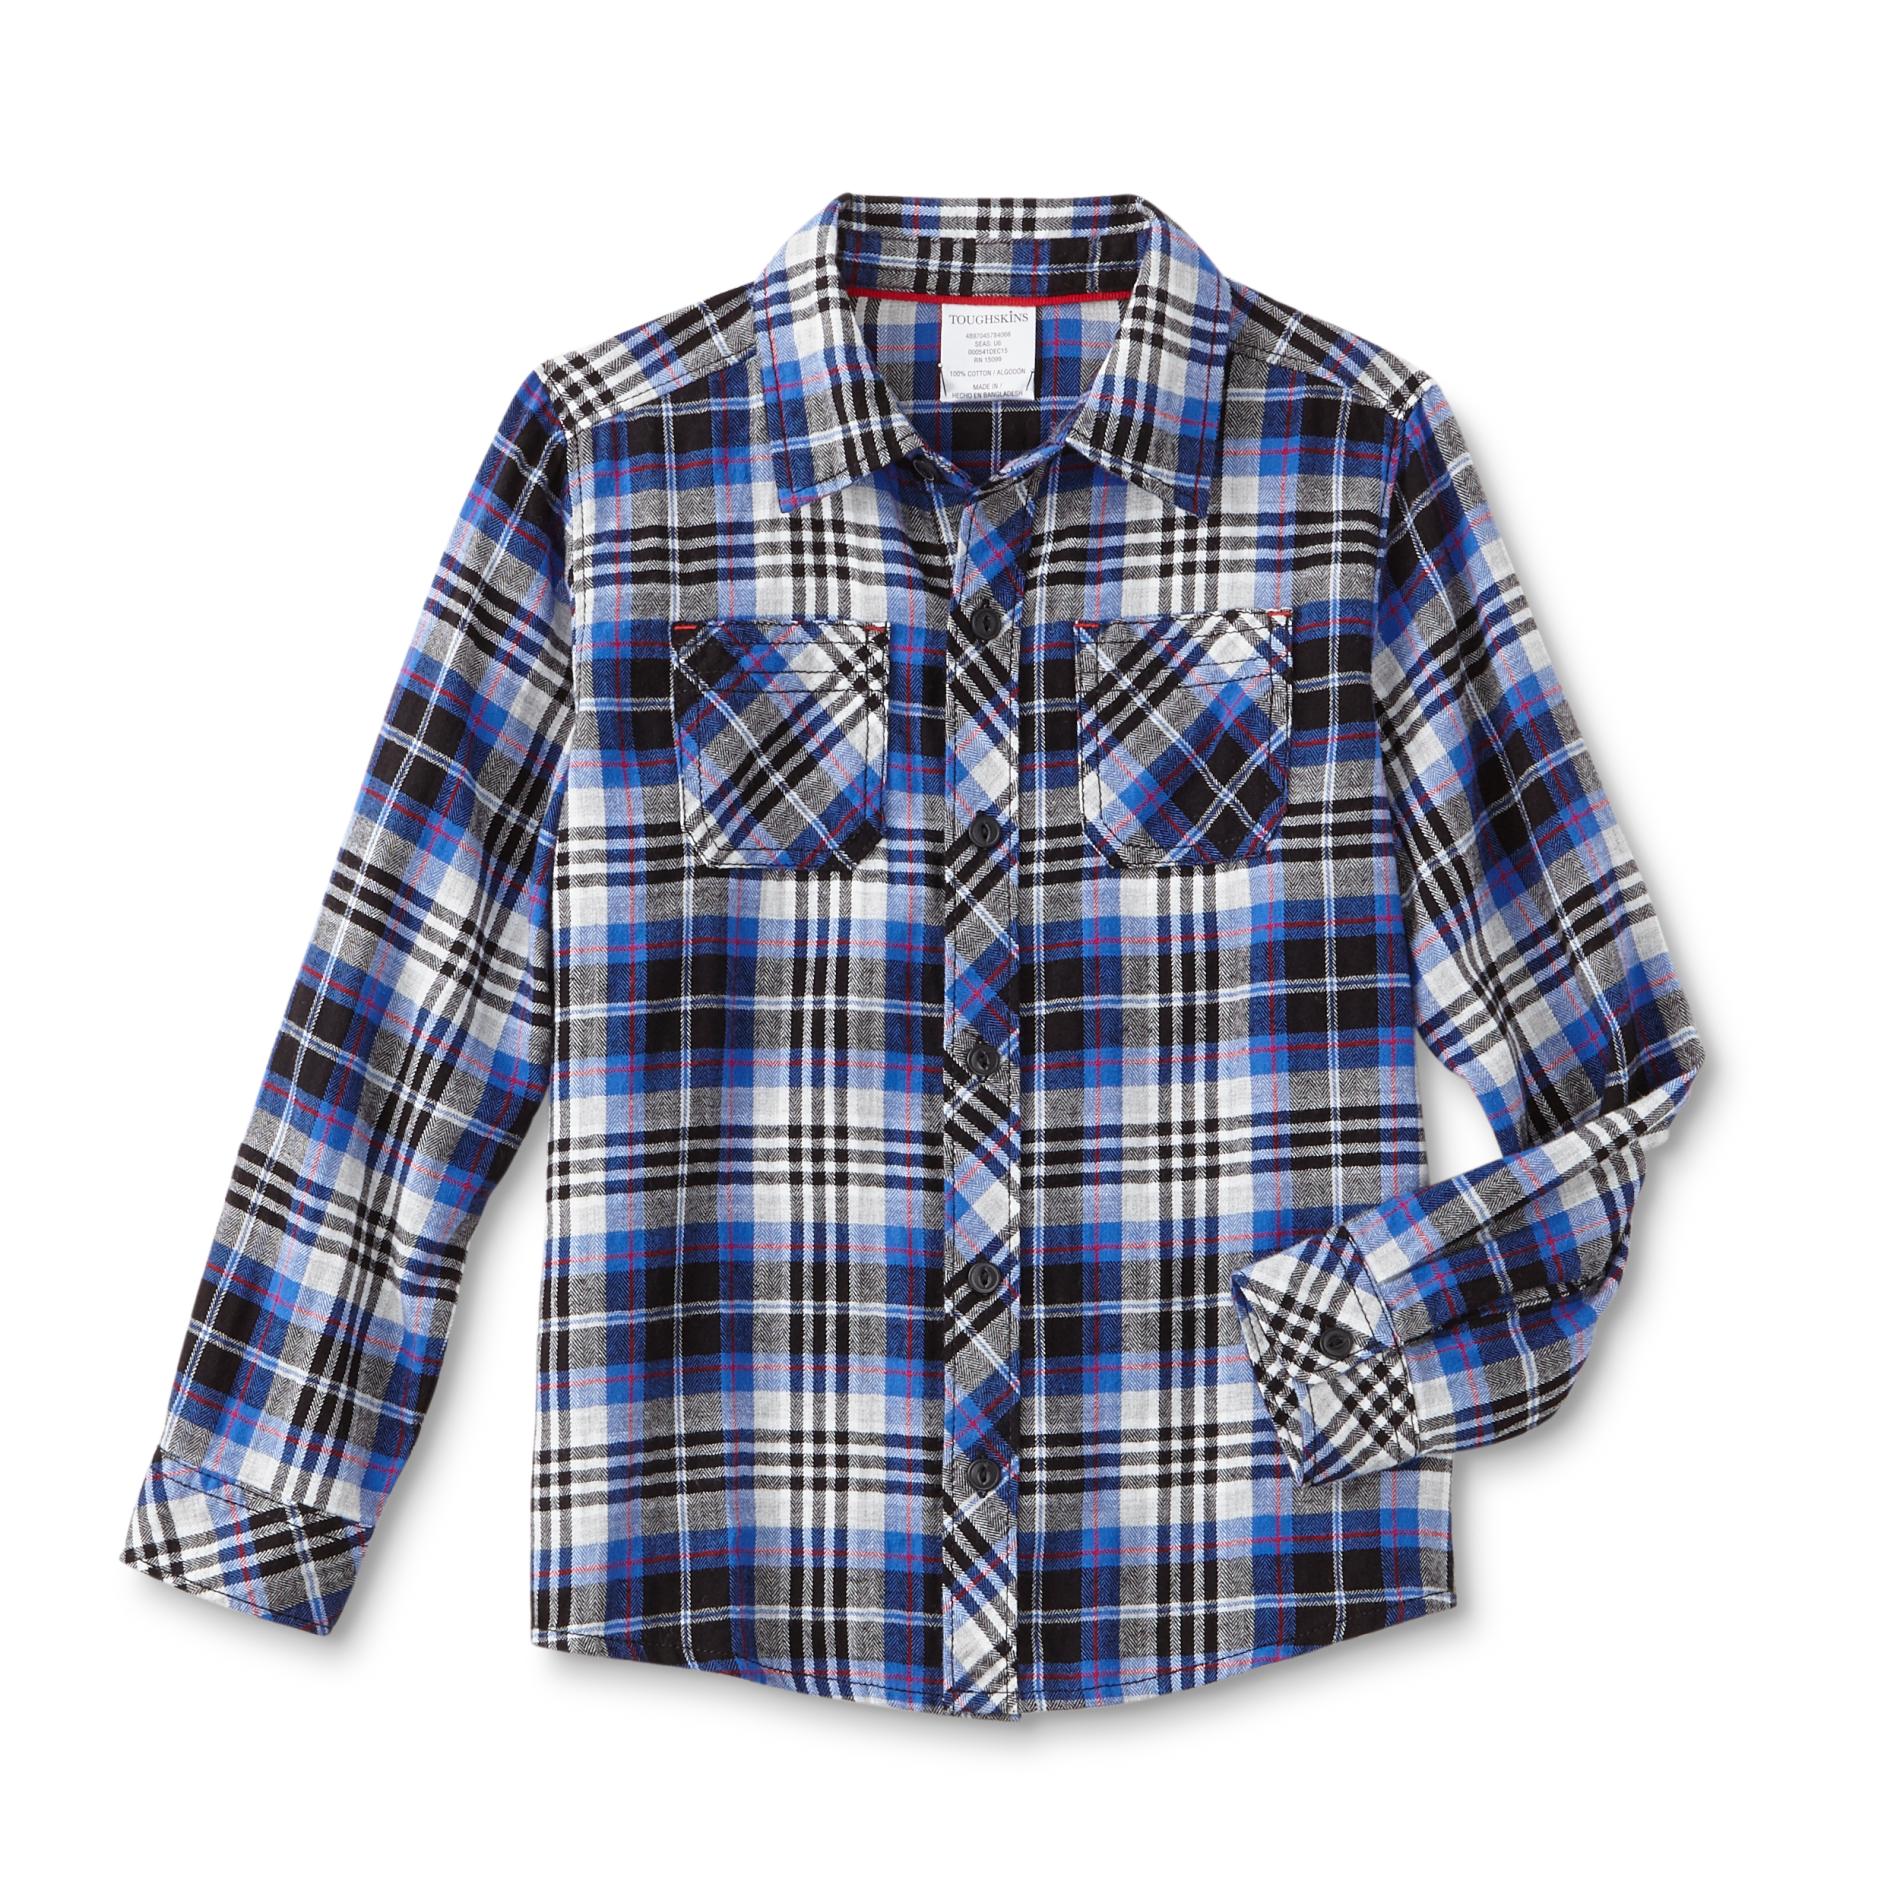 Toughskins Boys' Flannel Shirt - Plaid